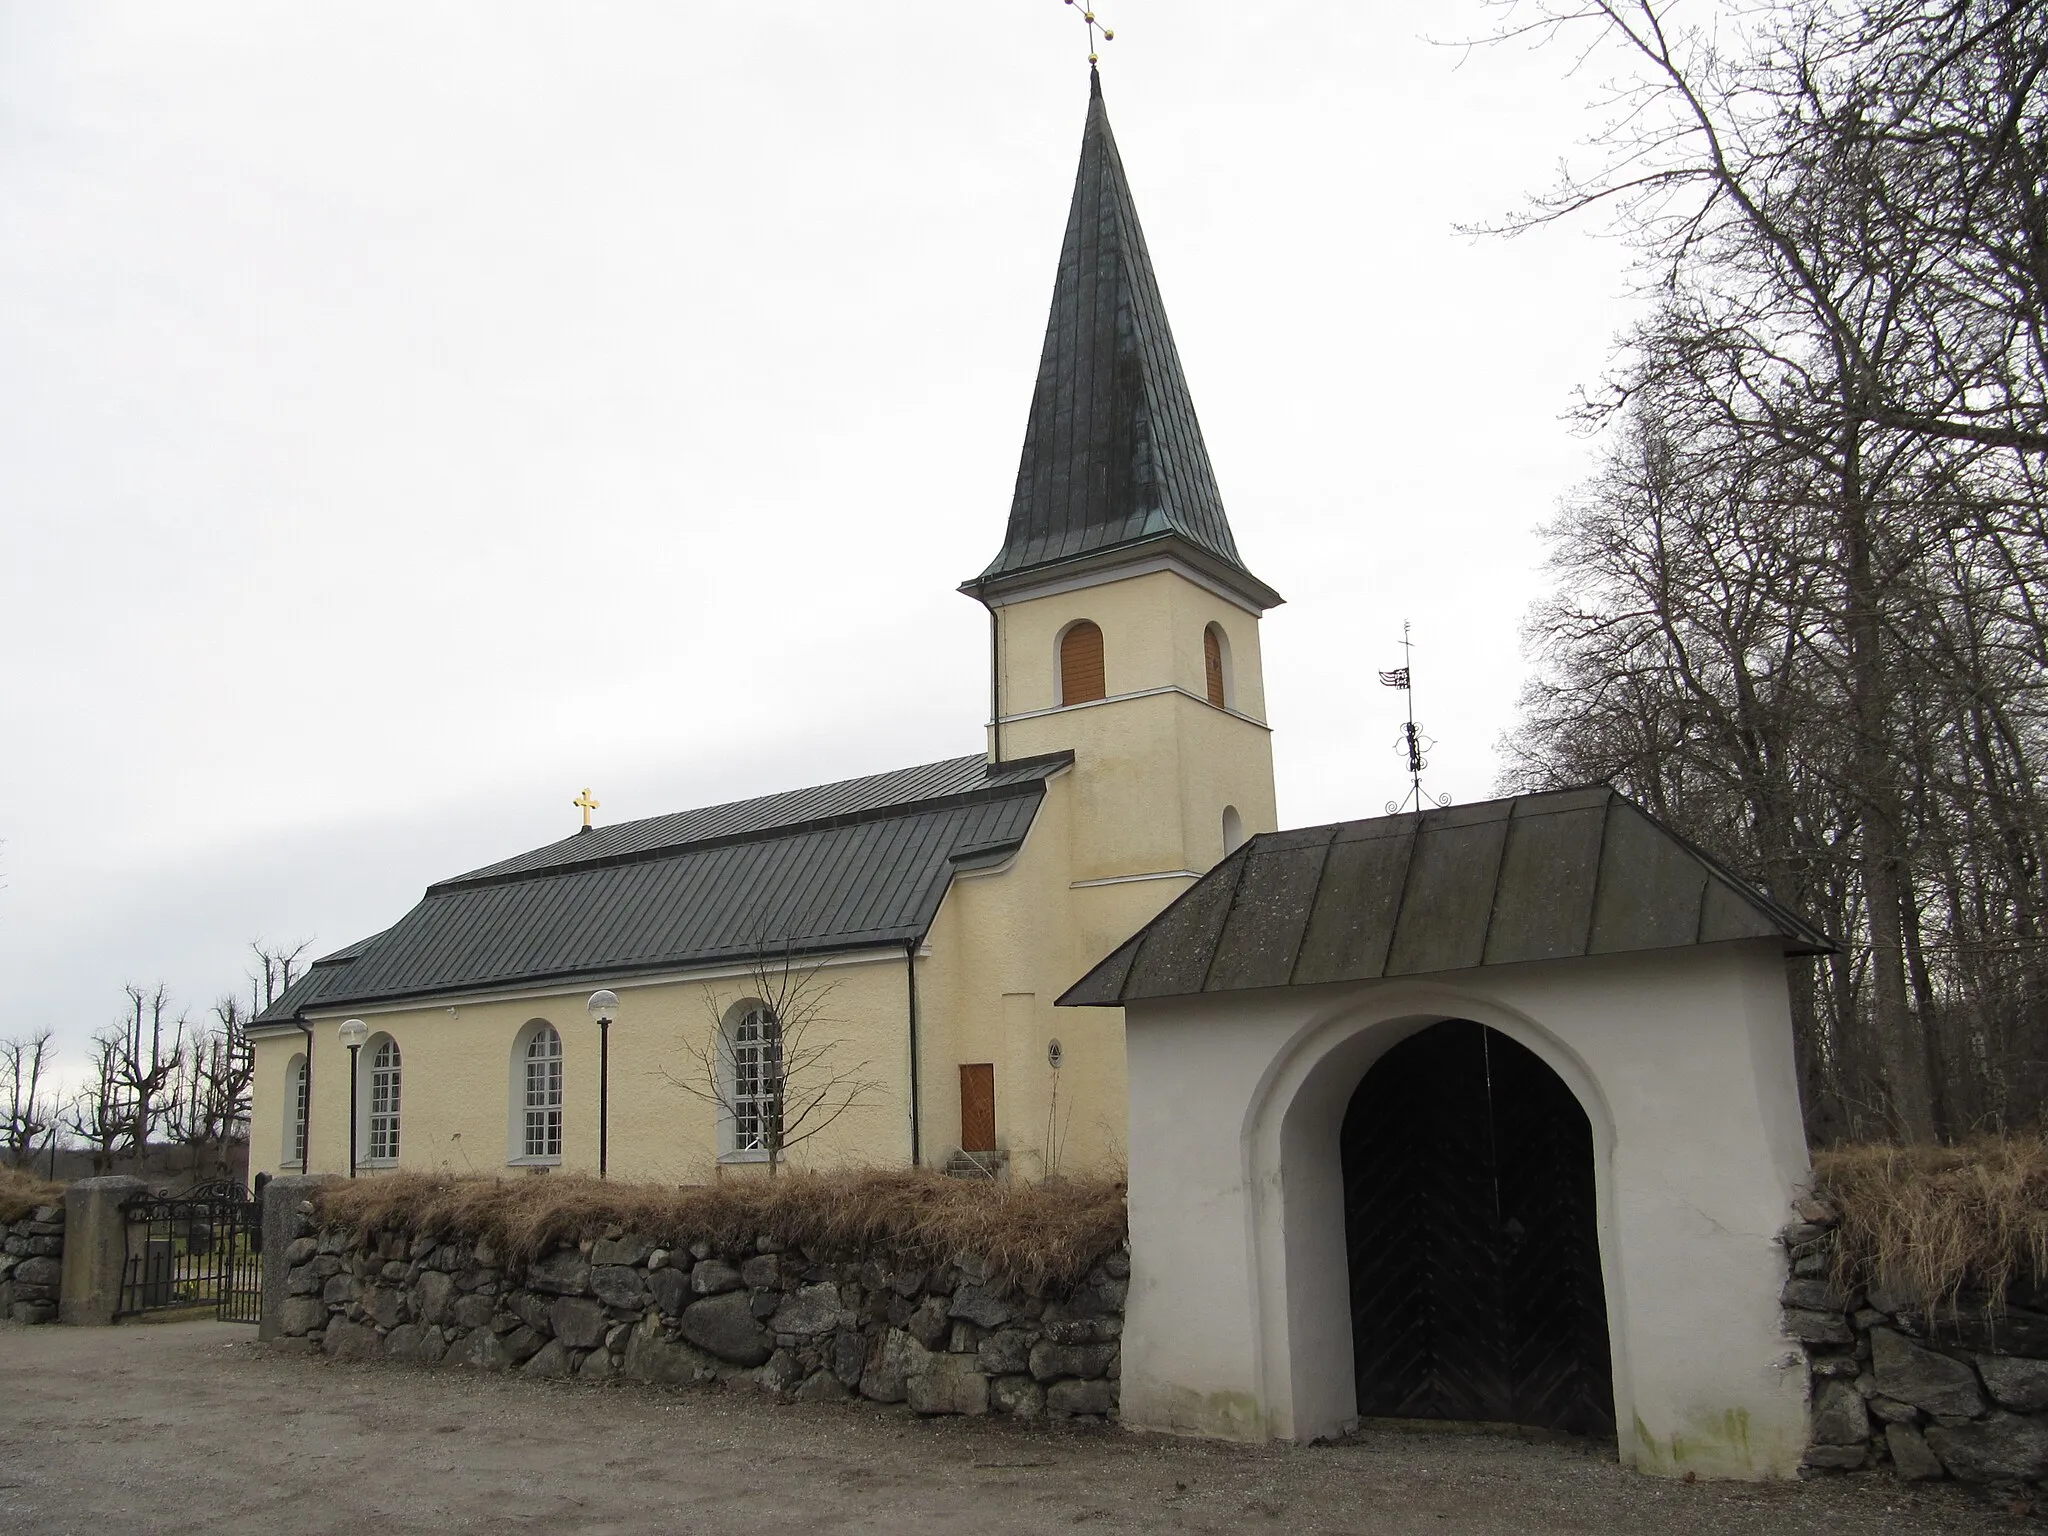 Photo showing: The church Axberg outside Örebro, Sweden